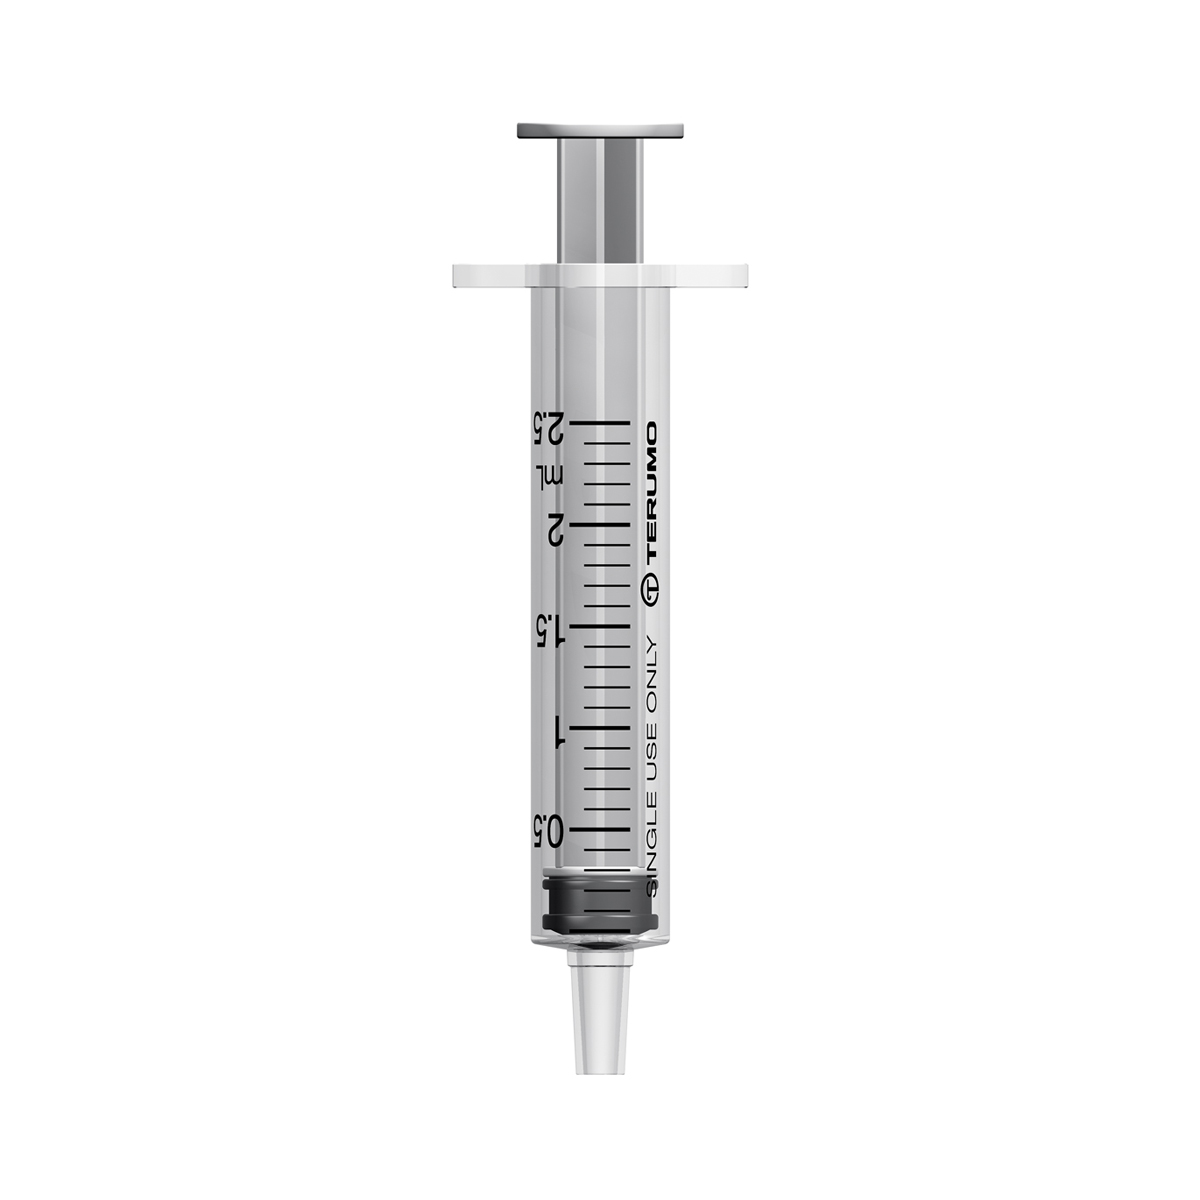 3ml Terumo syringe barrel 